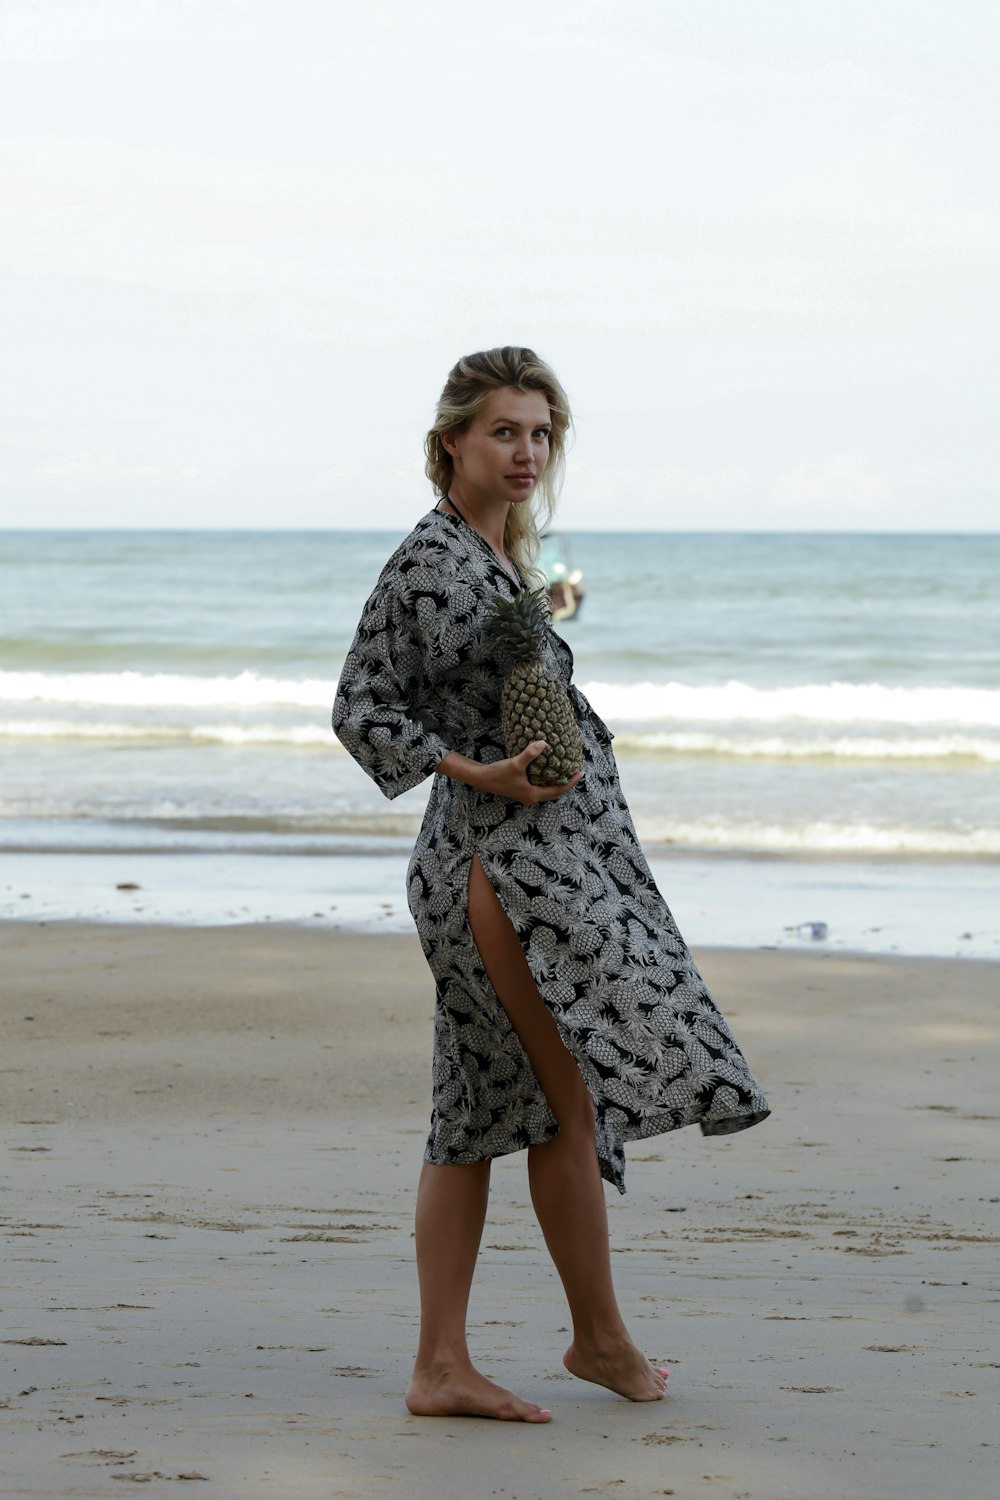 a man in a dress on a beach